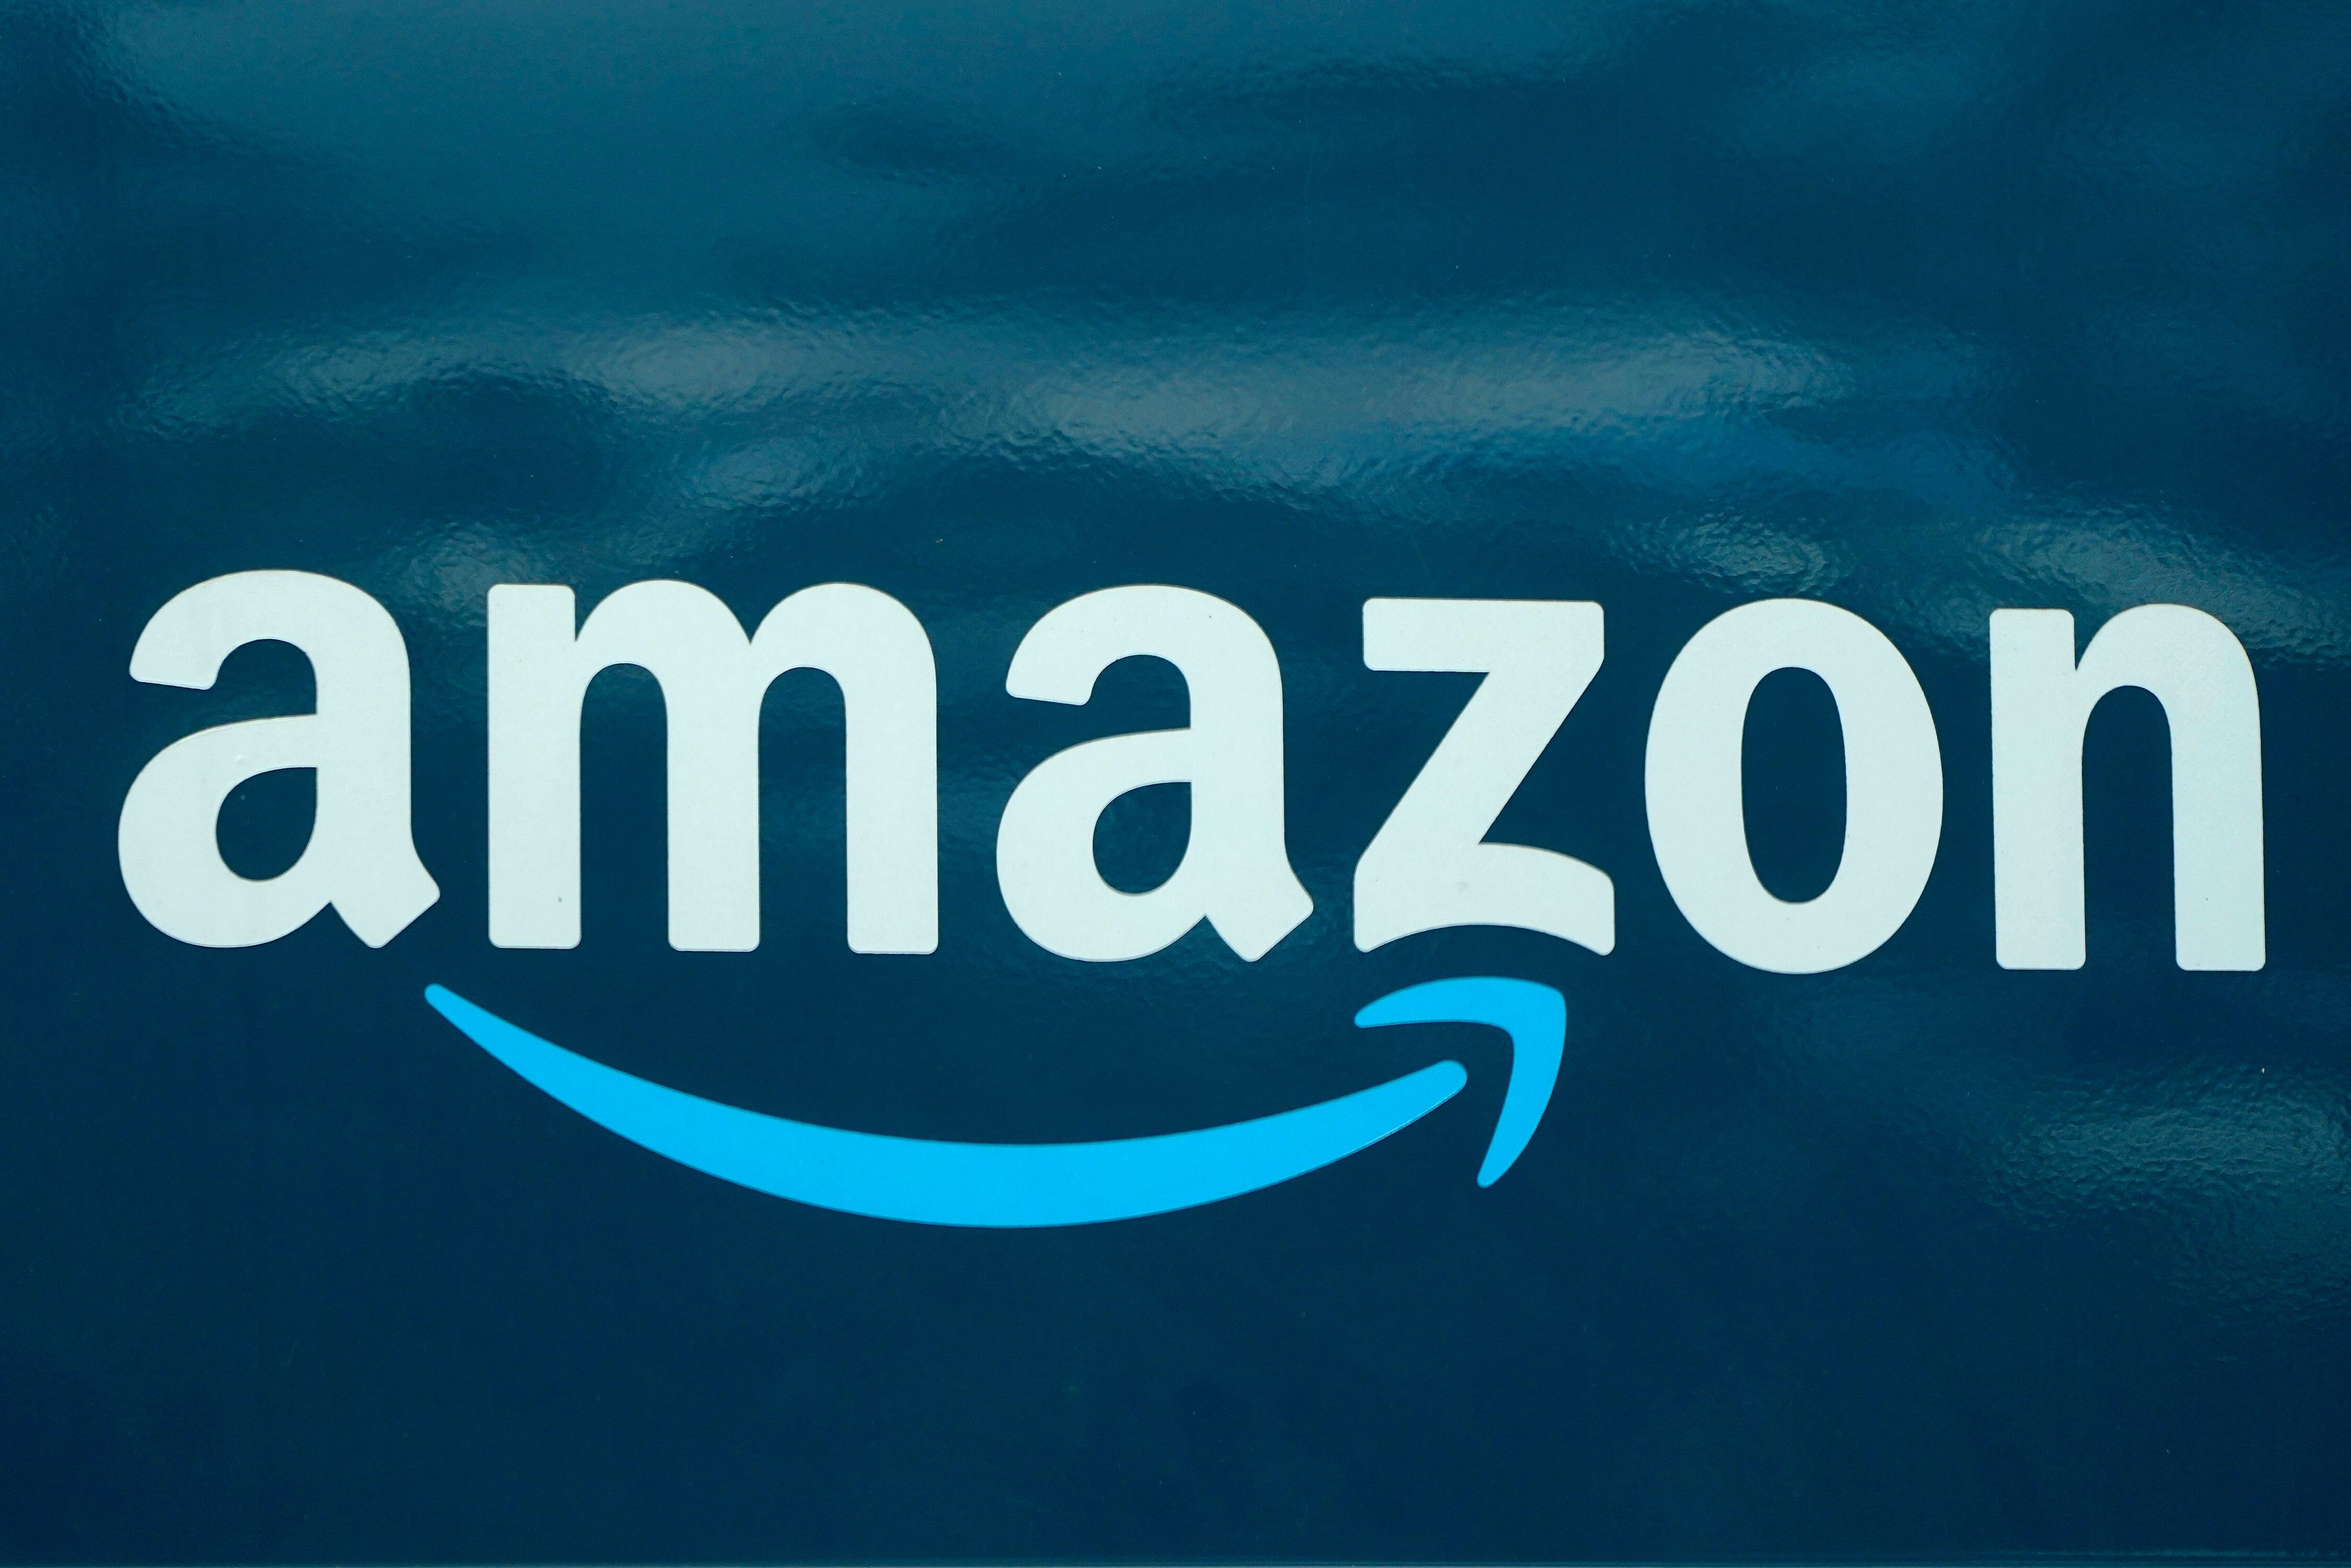 EU regulators clear Amazon’s $8.45 billion purchase of MGM